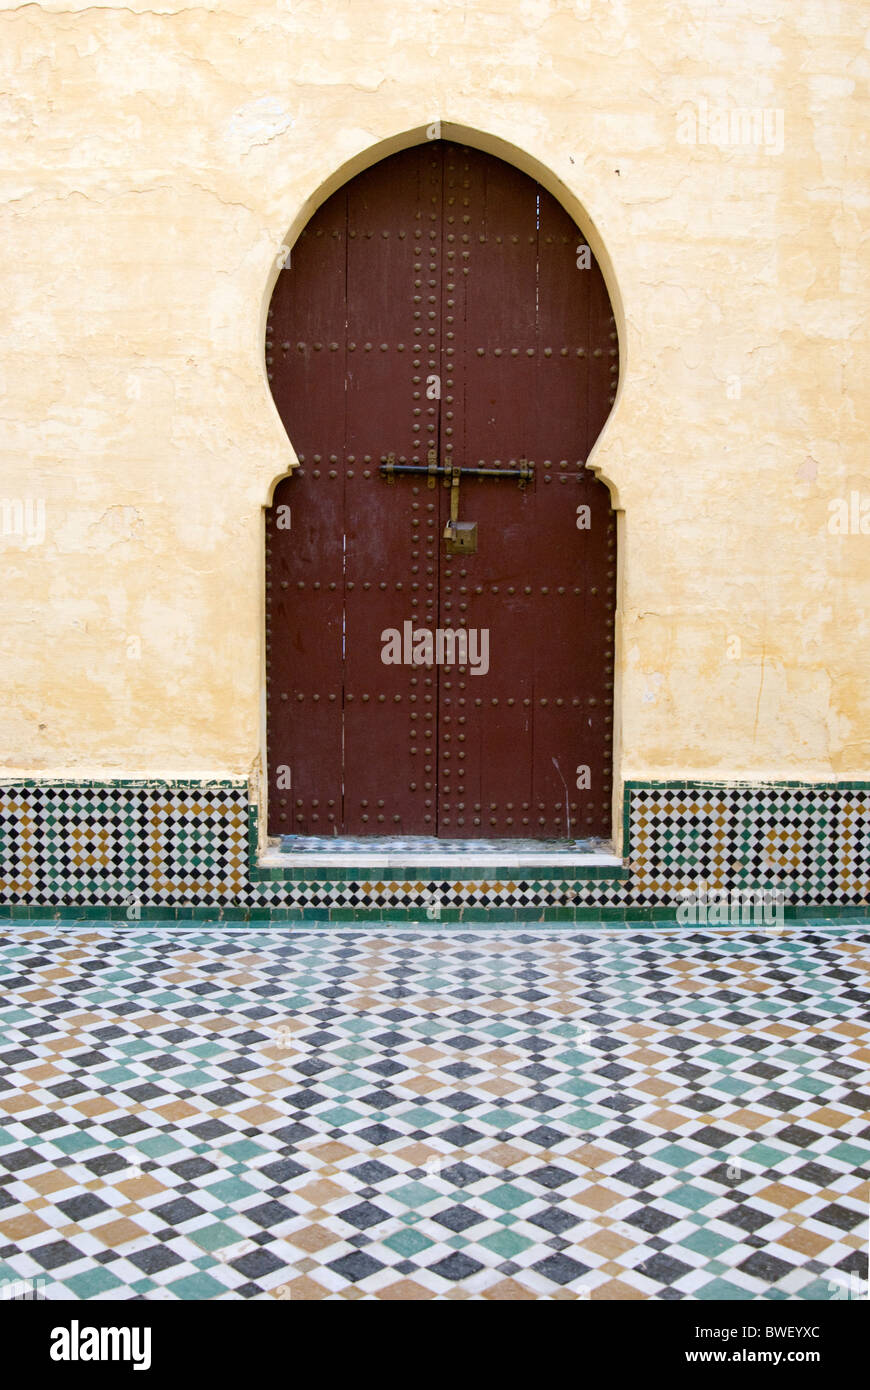 Palace Dar El Makhzen in Meknes, Morocco Stock Photo